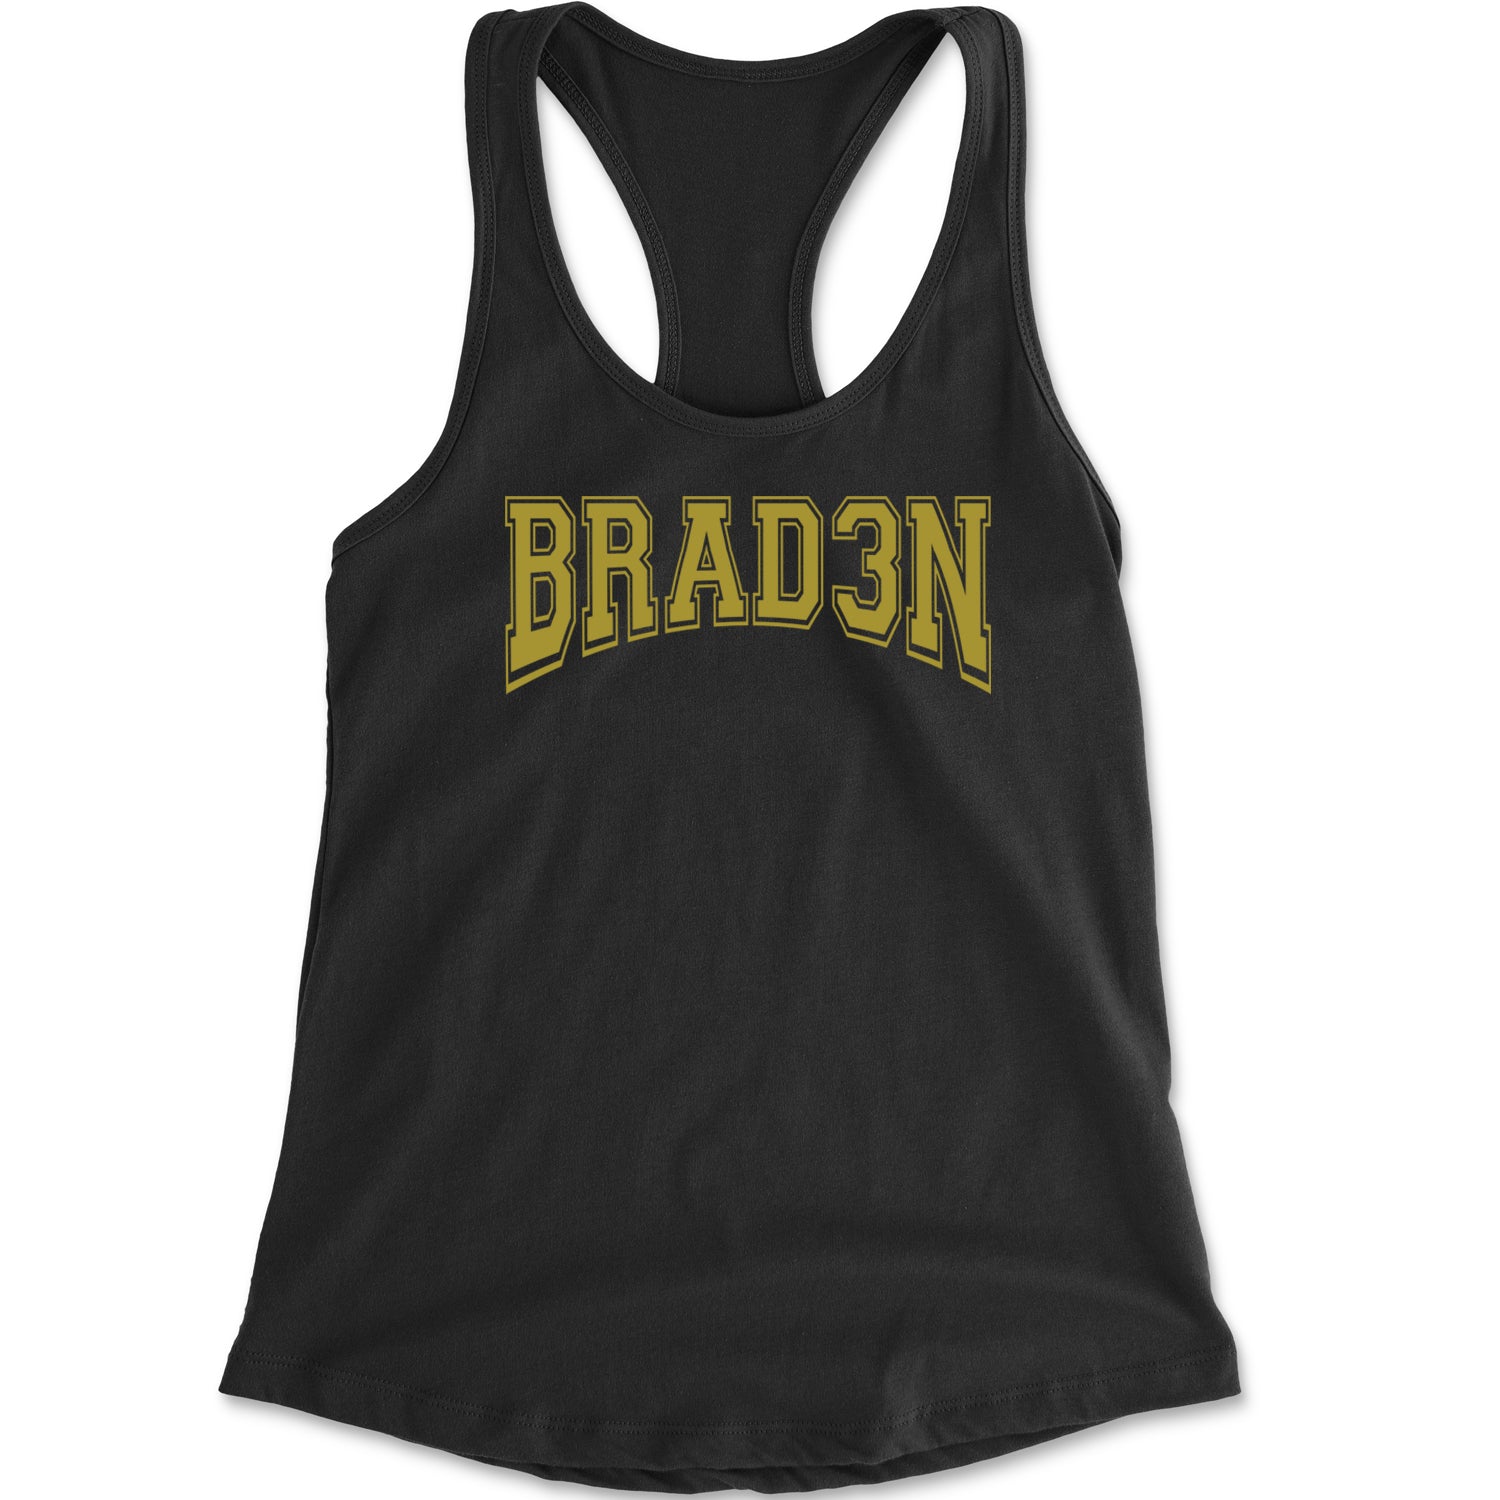 Braden Brad3n Basketball Racerback Tank Top for Women